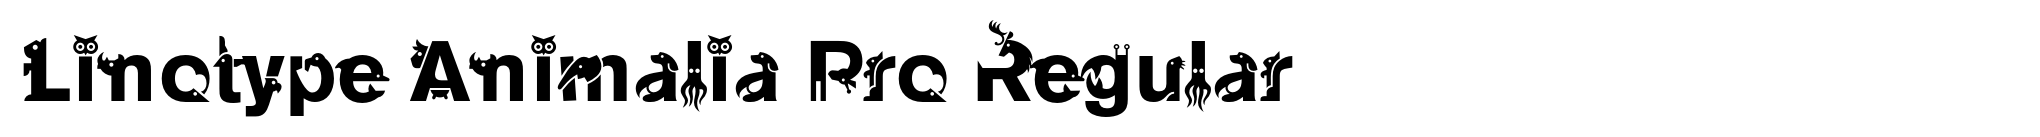 Linotype Animalia Pro Regular image